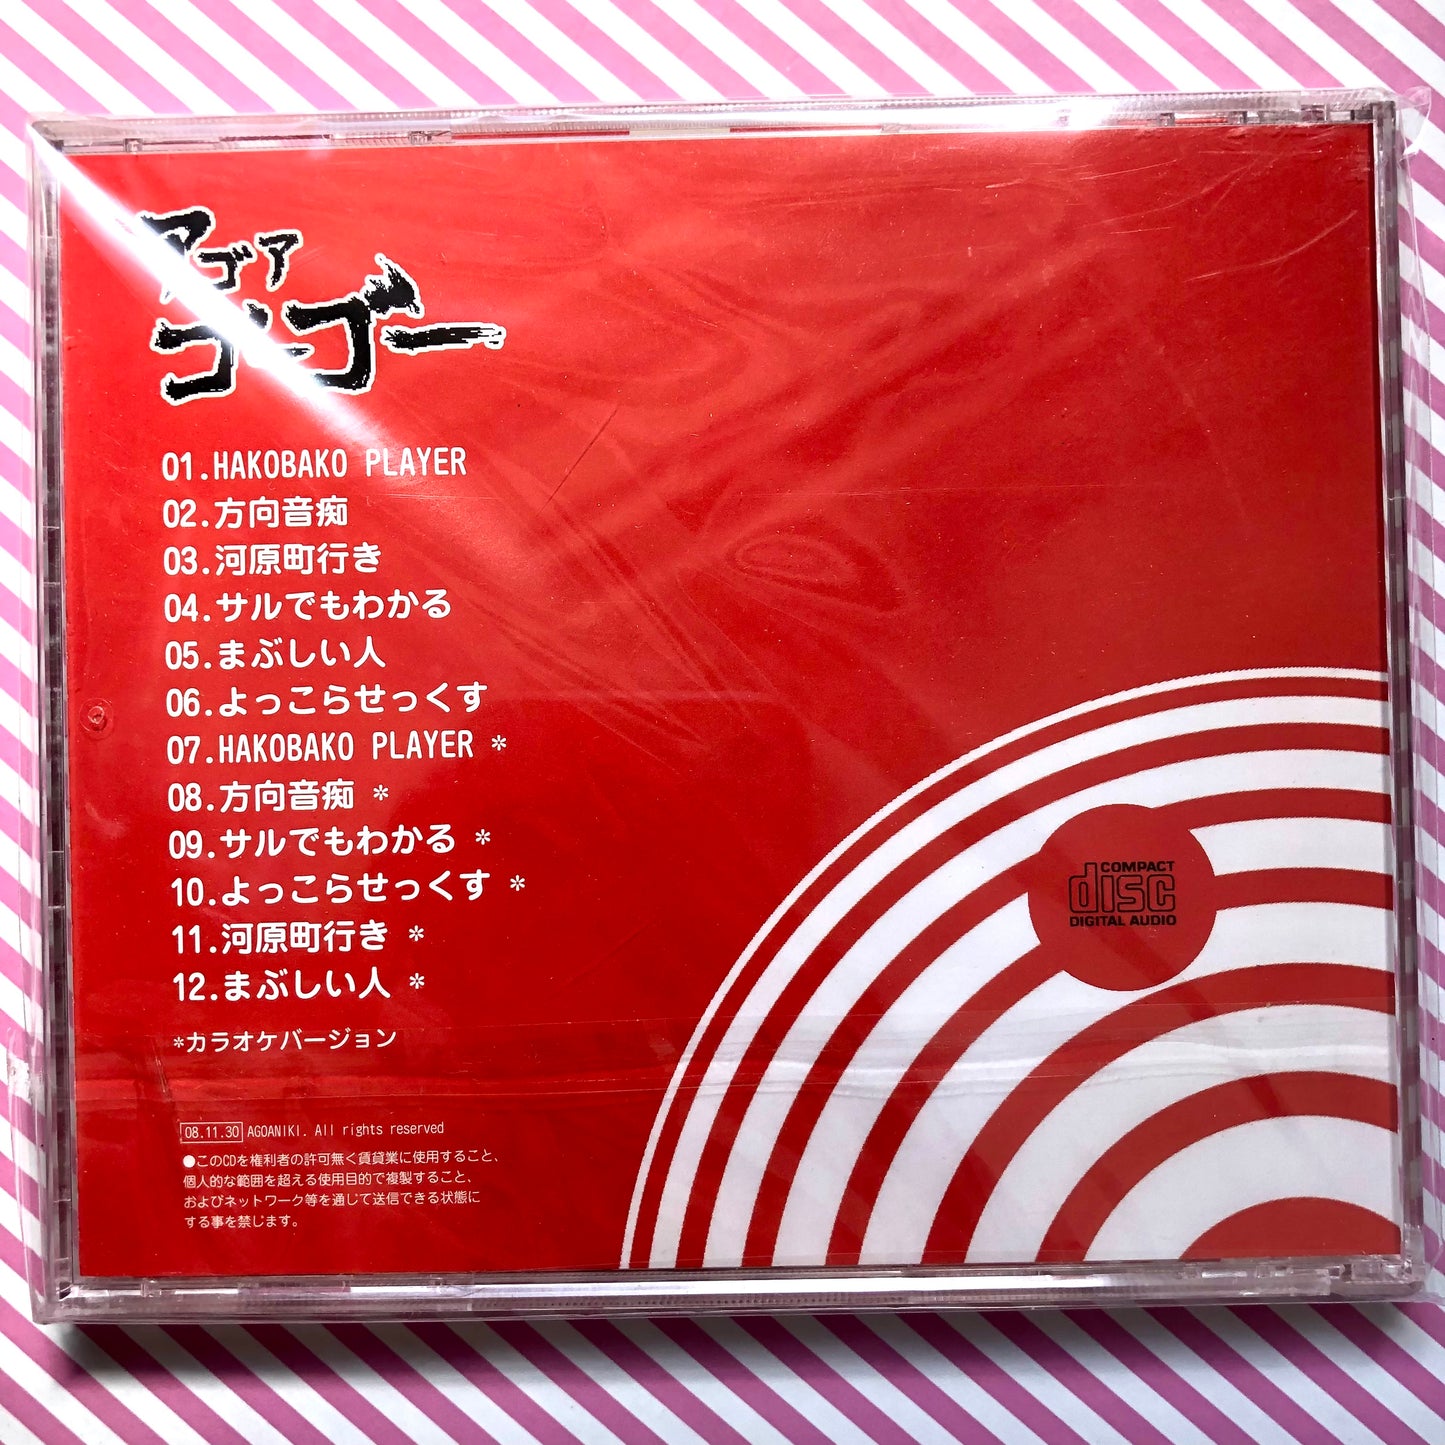 Ago Ago Go Go Go - Agoaniki Vocaloid Hatsune Miku Album CD